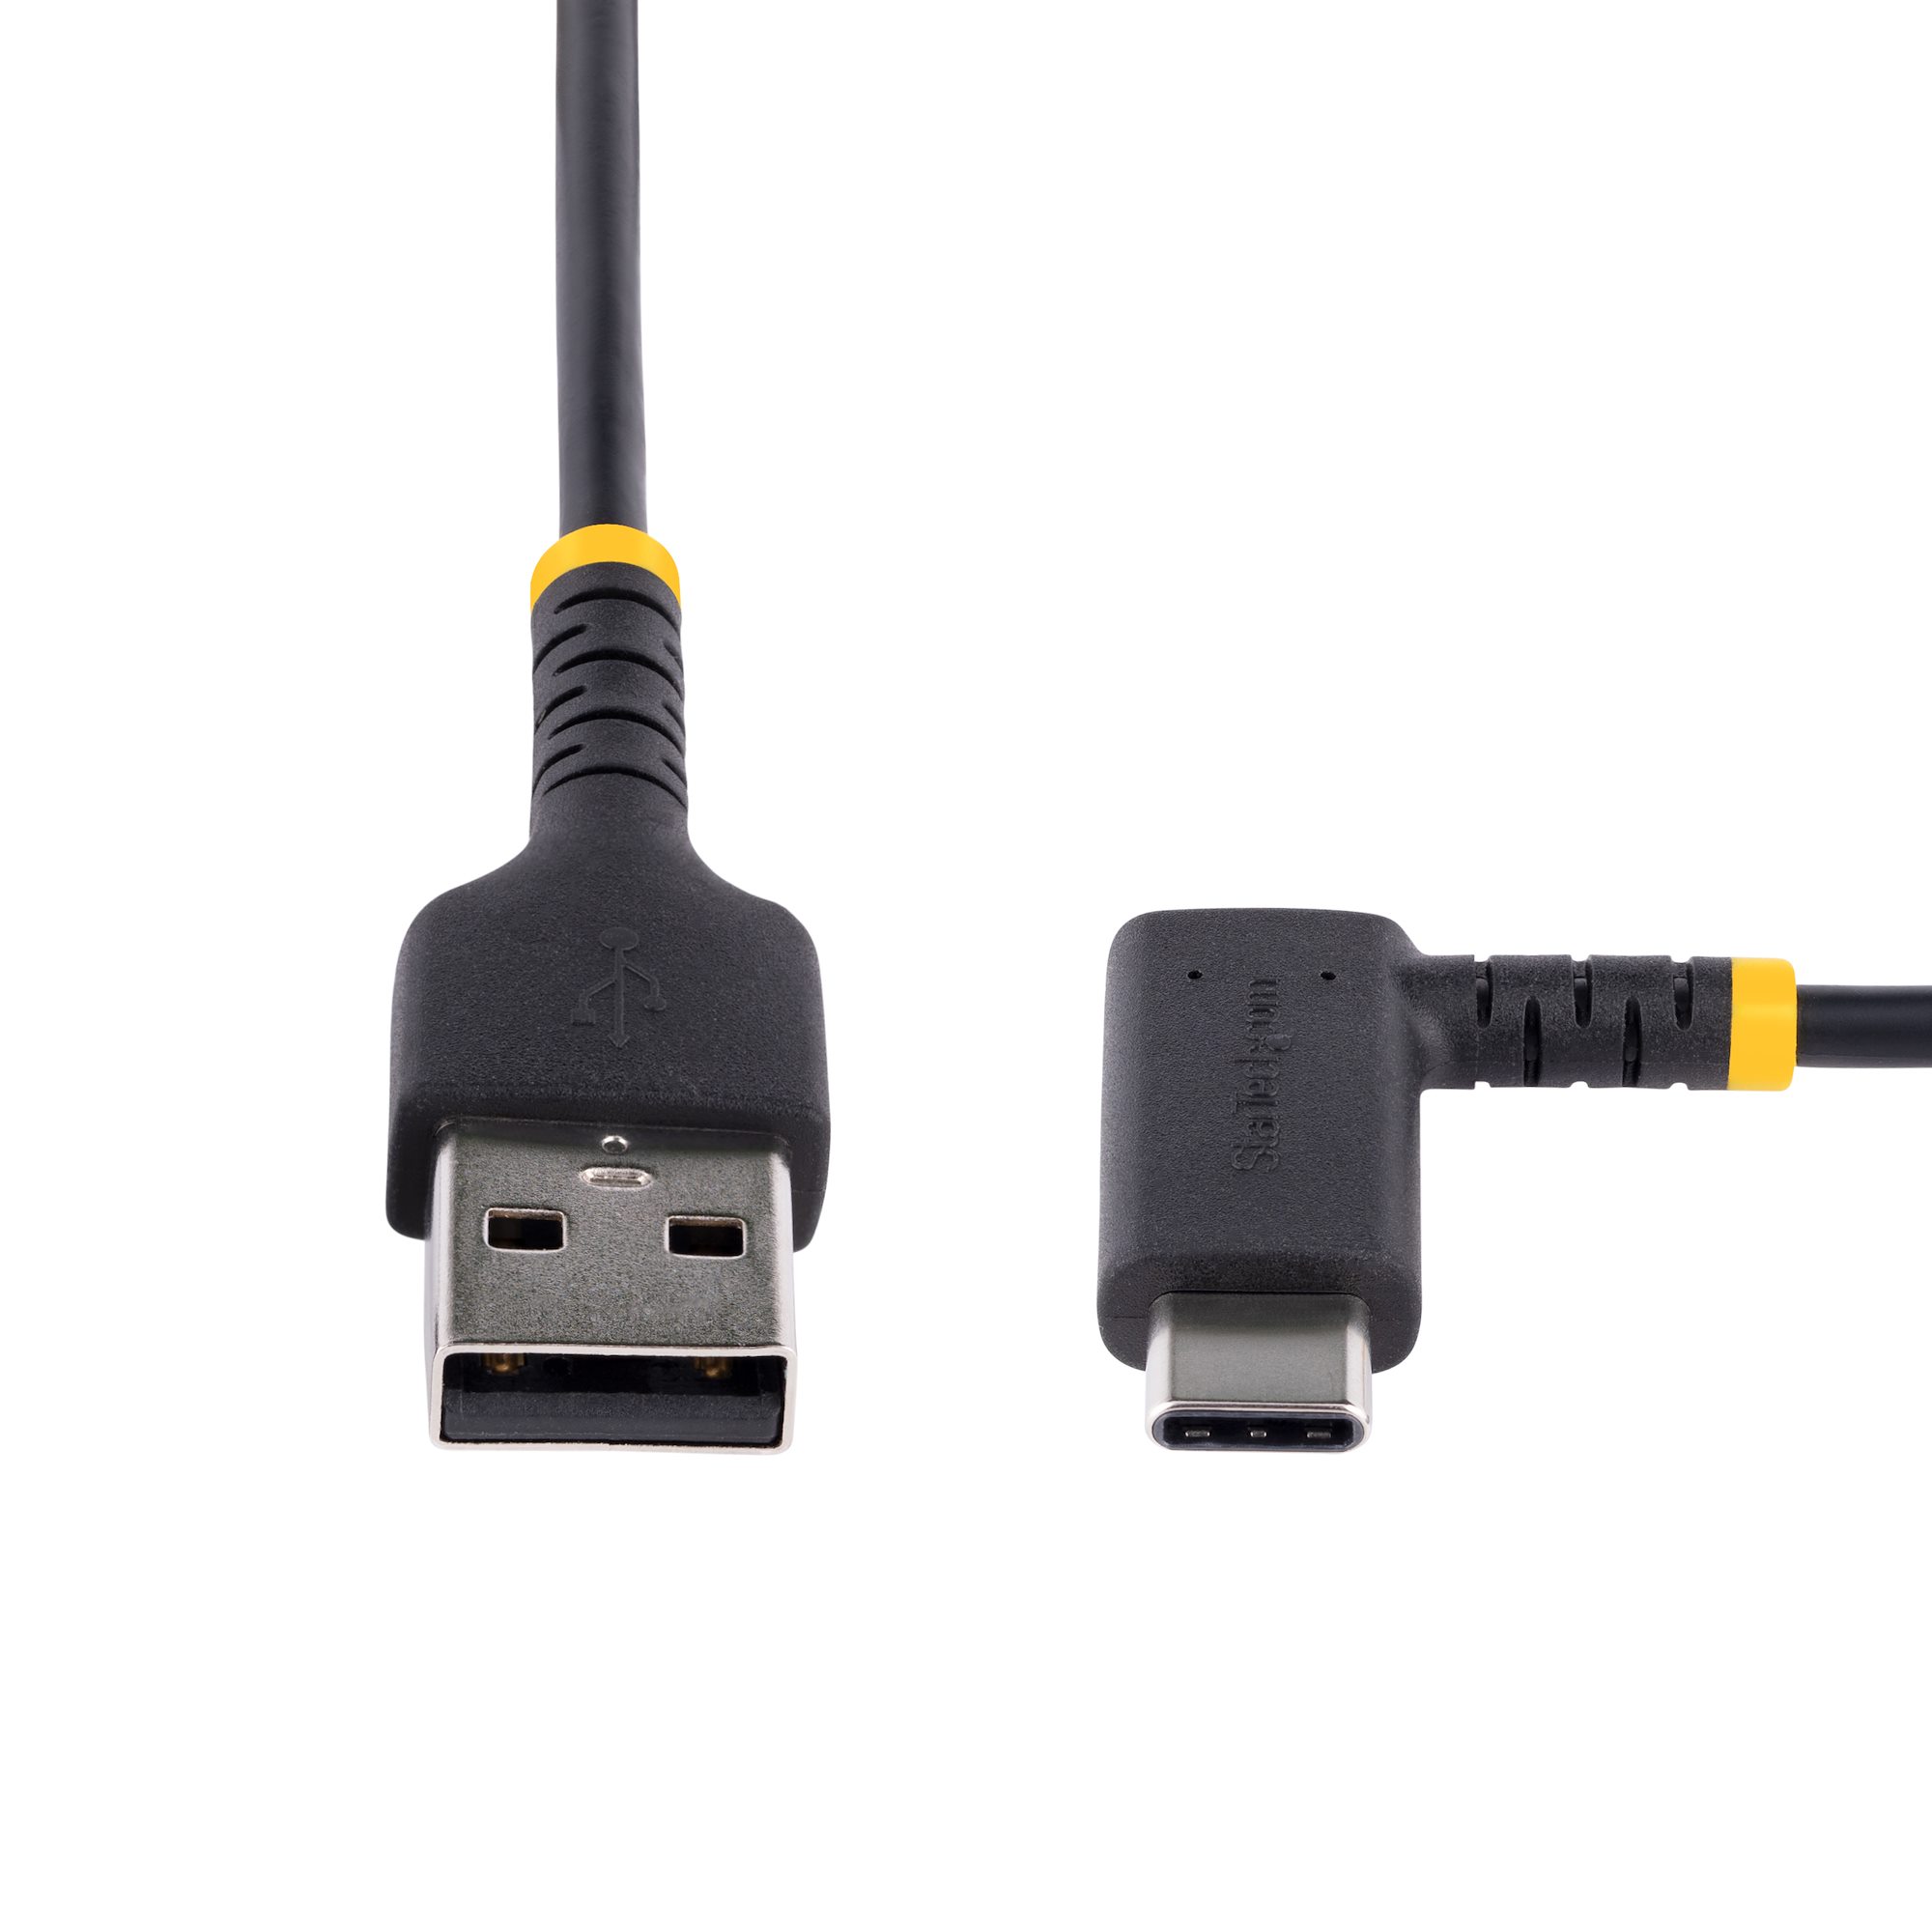 Cable USB A a USB C Startech R2ACC-1M-USB-CABLE Negro 1 m